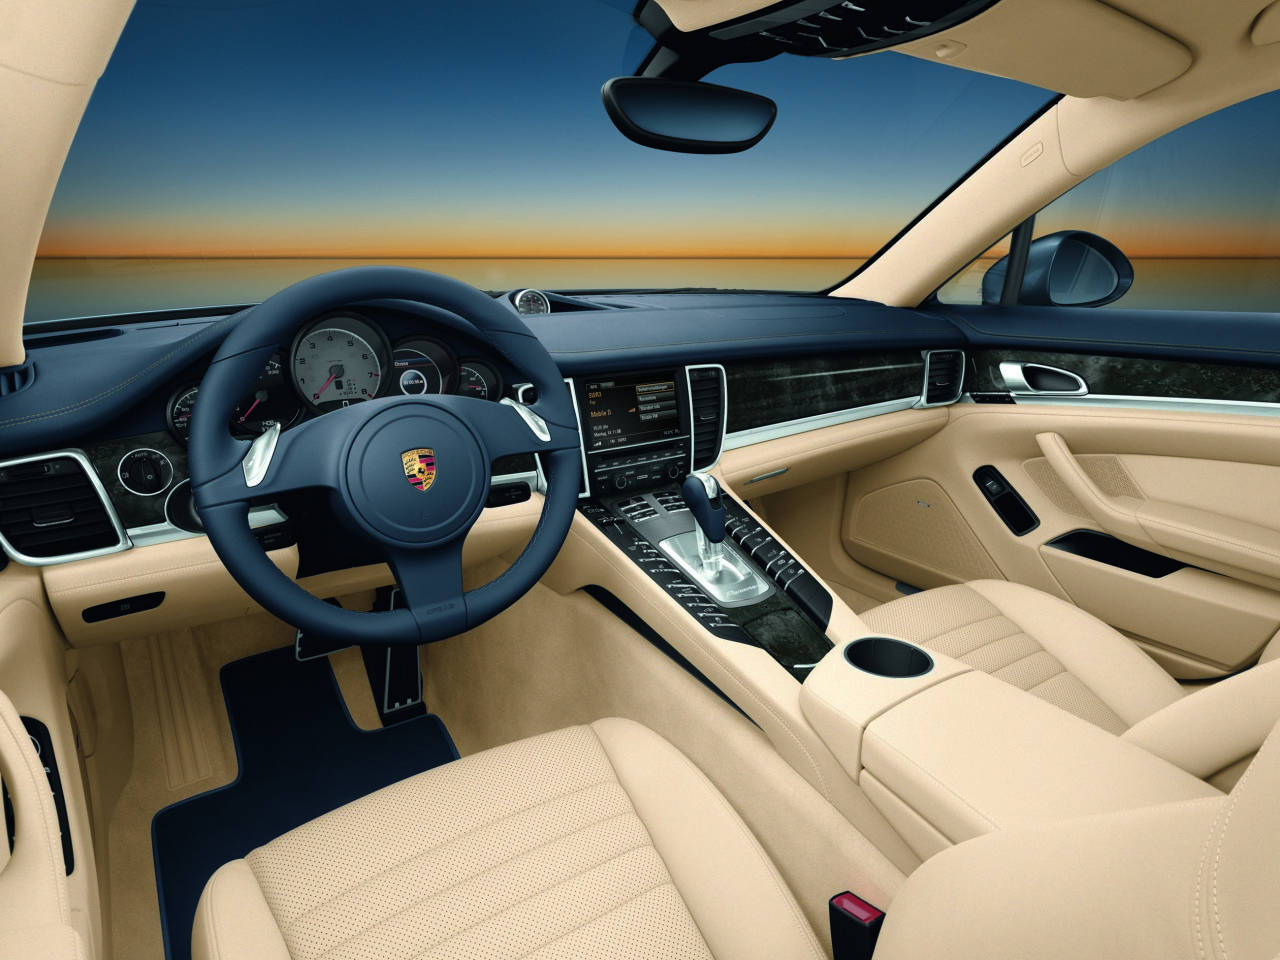 Official Images Of Porsche Panamera Interior